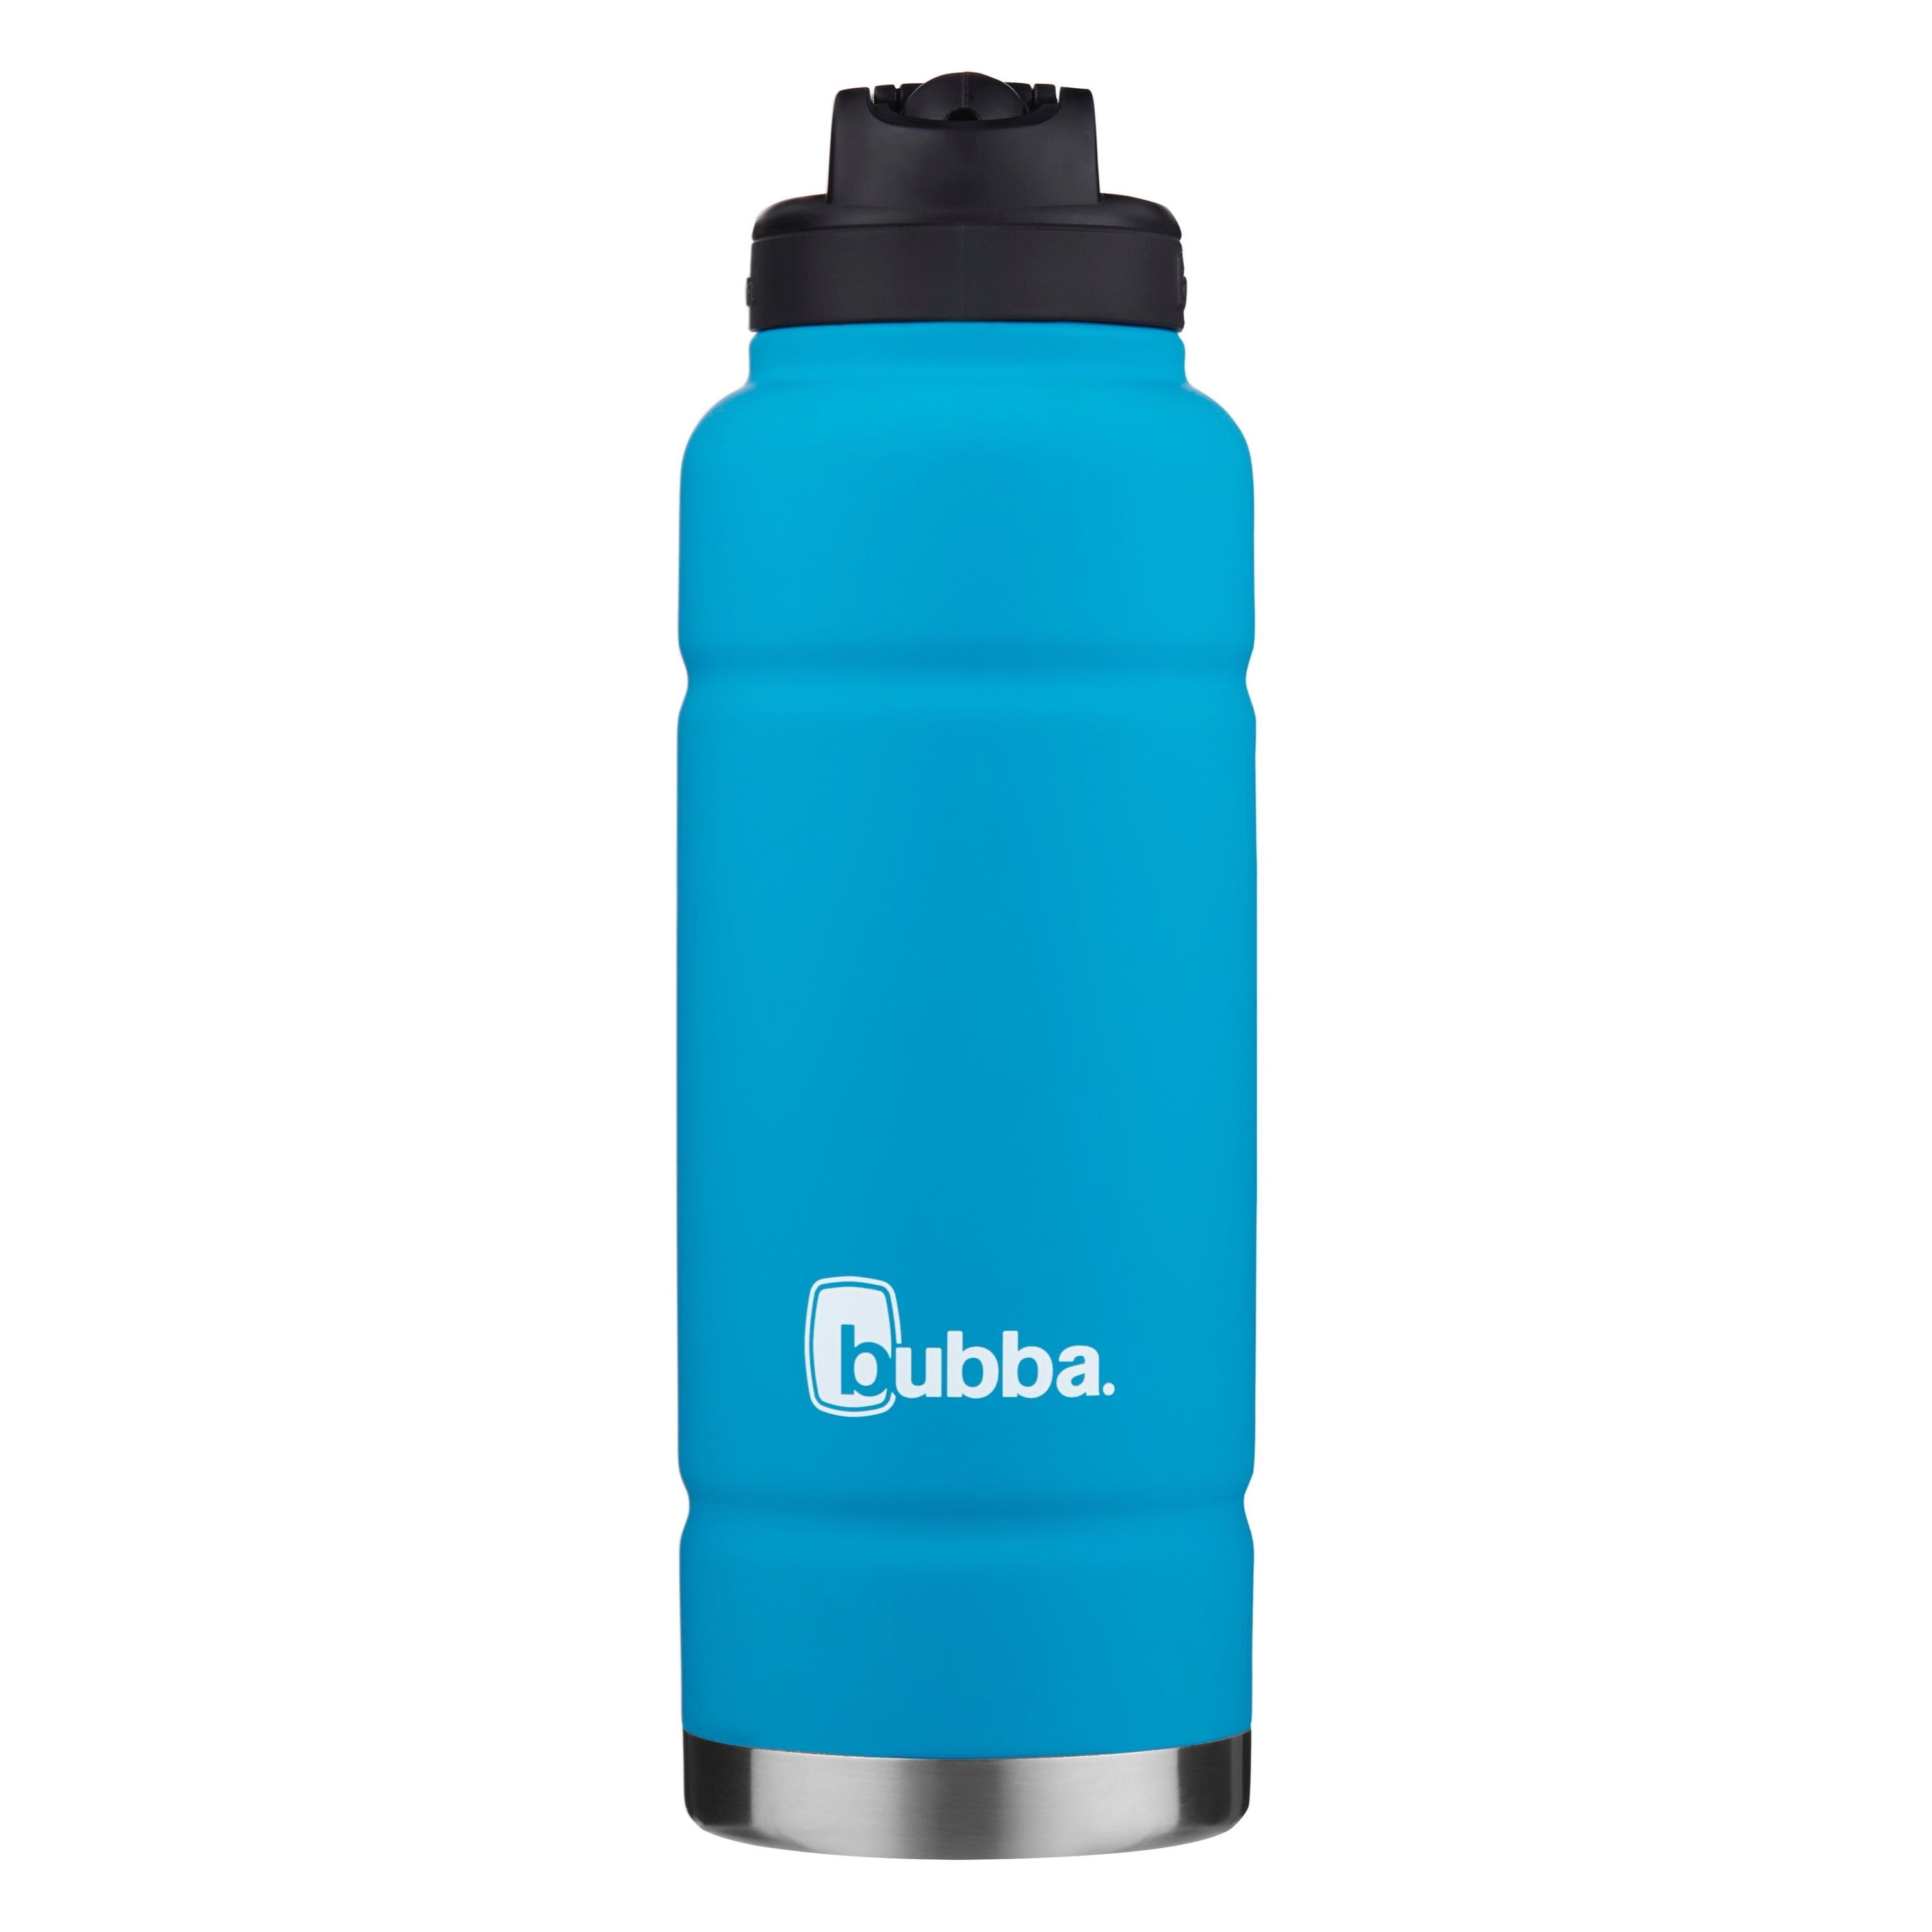 Bubba Trailblazer Straw Lid Stainless Steel Water Bottle - 40 oz